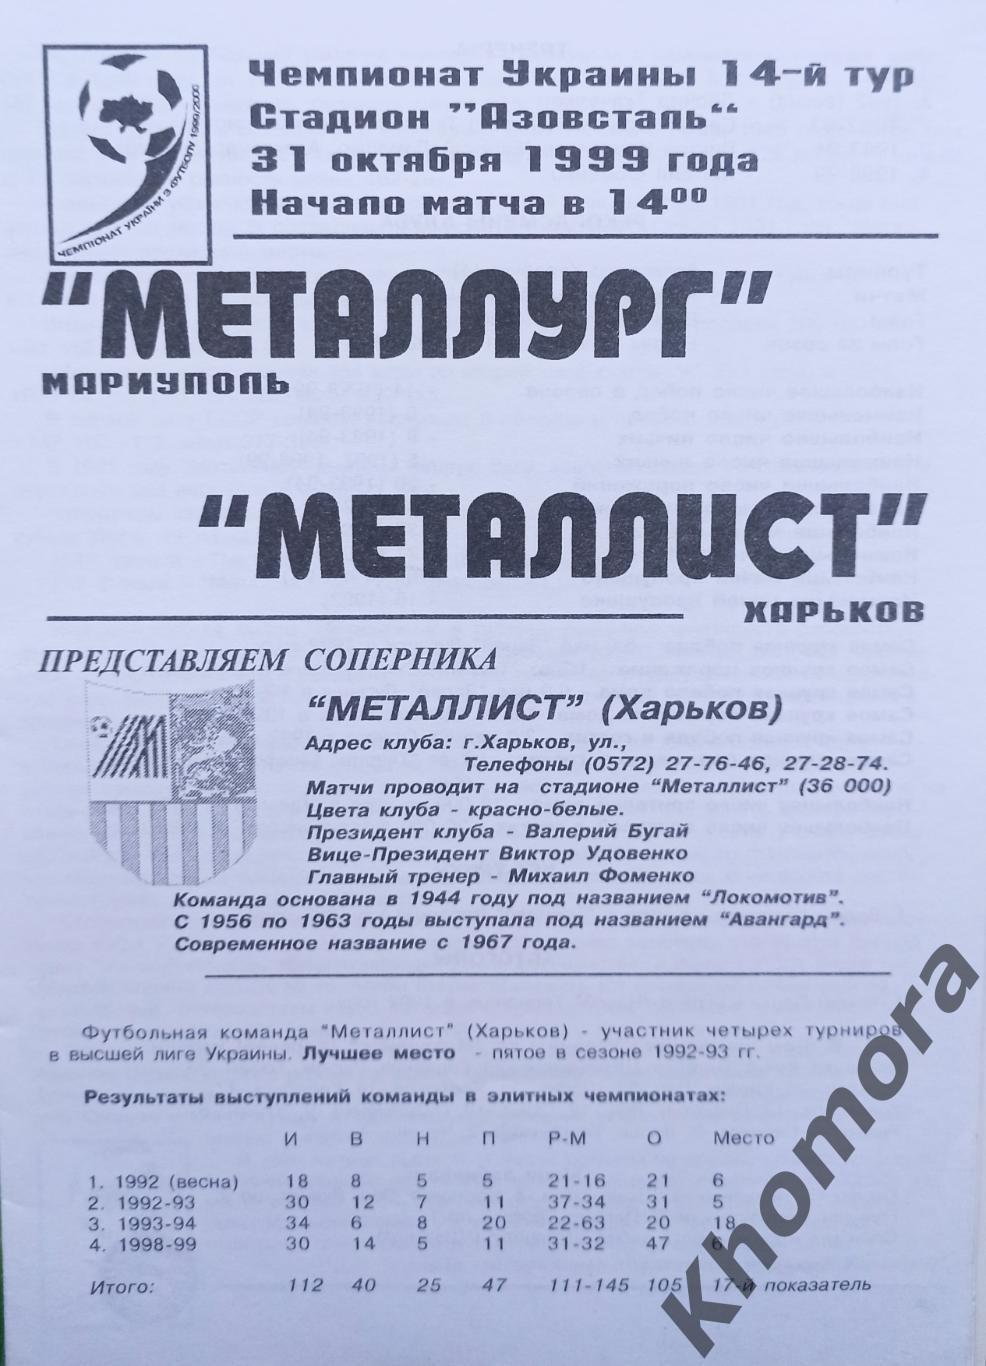 Металлург (Мариуполь) - Металлист (Харьков) 31.10.1999 - официальная программа 1